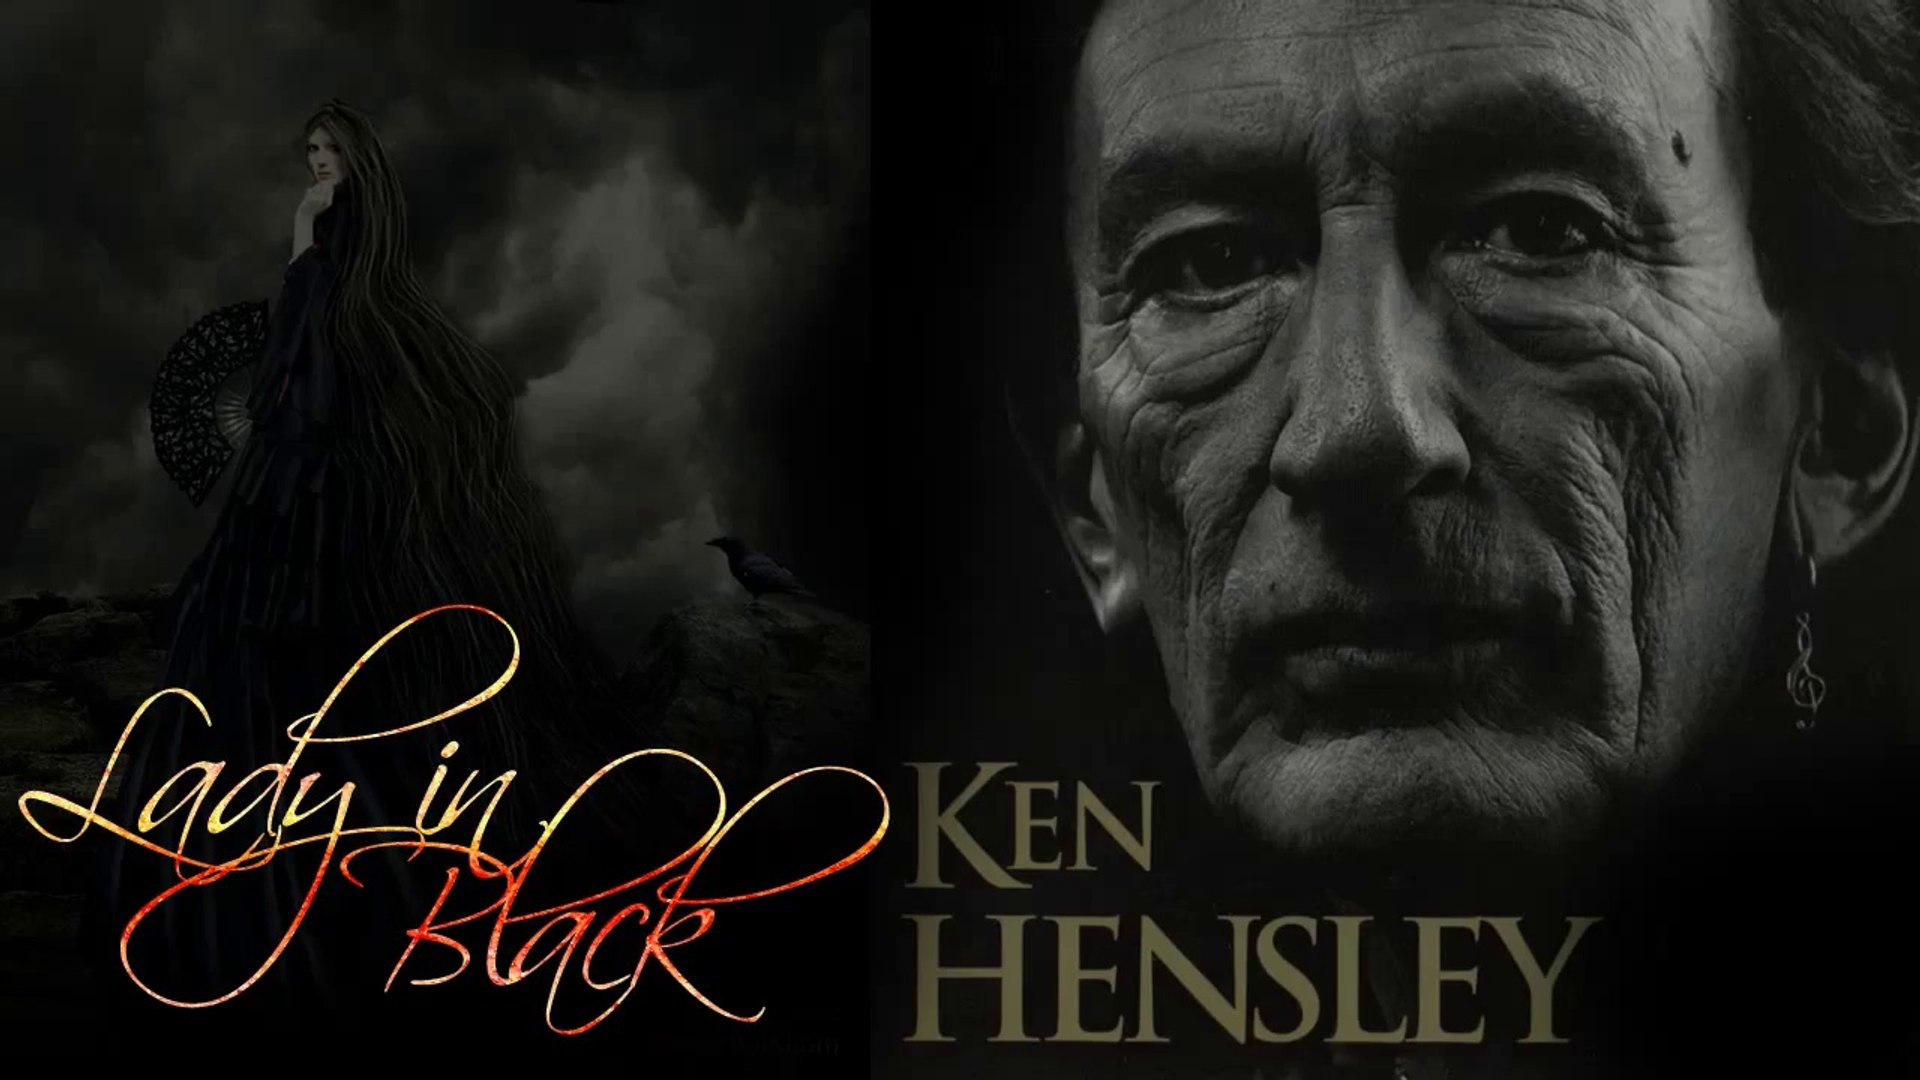 Ken Hensley - Lady in Black (SR) - HD - video Dailymotion